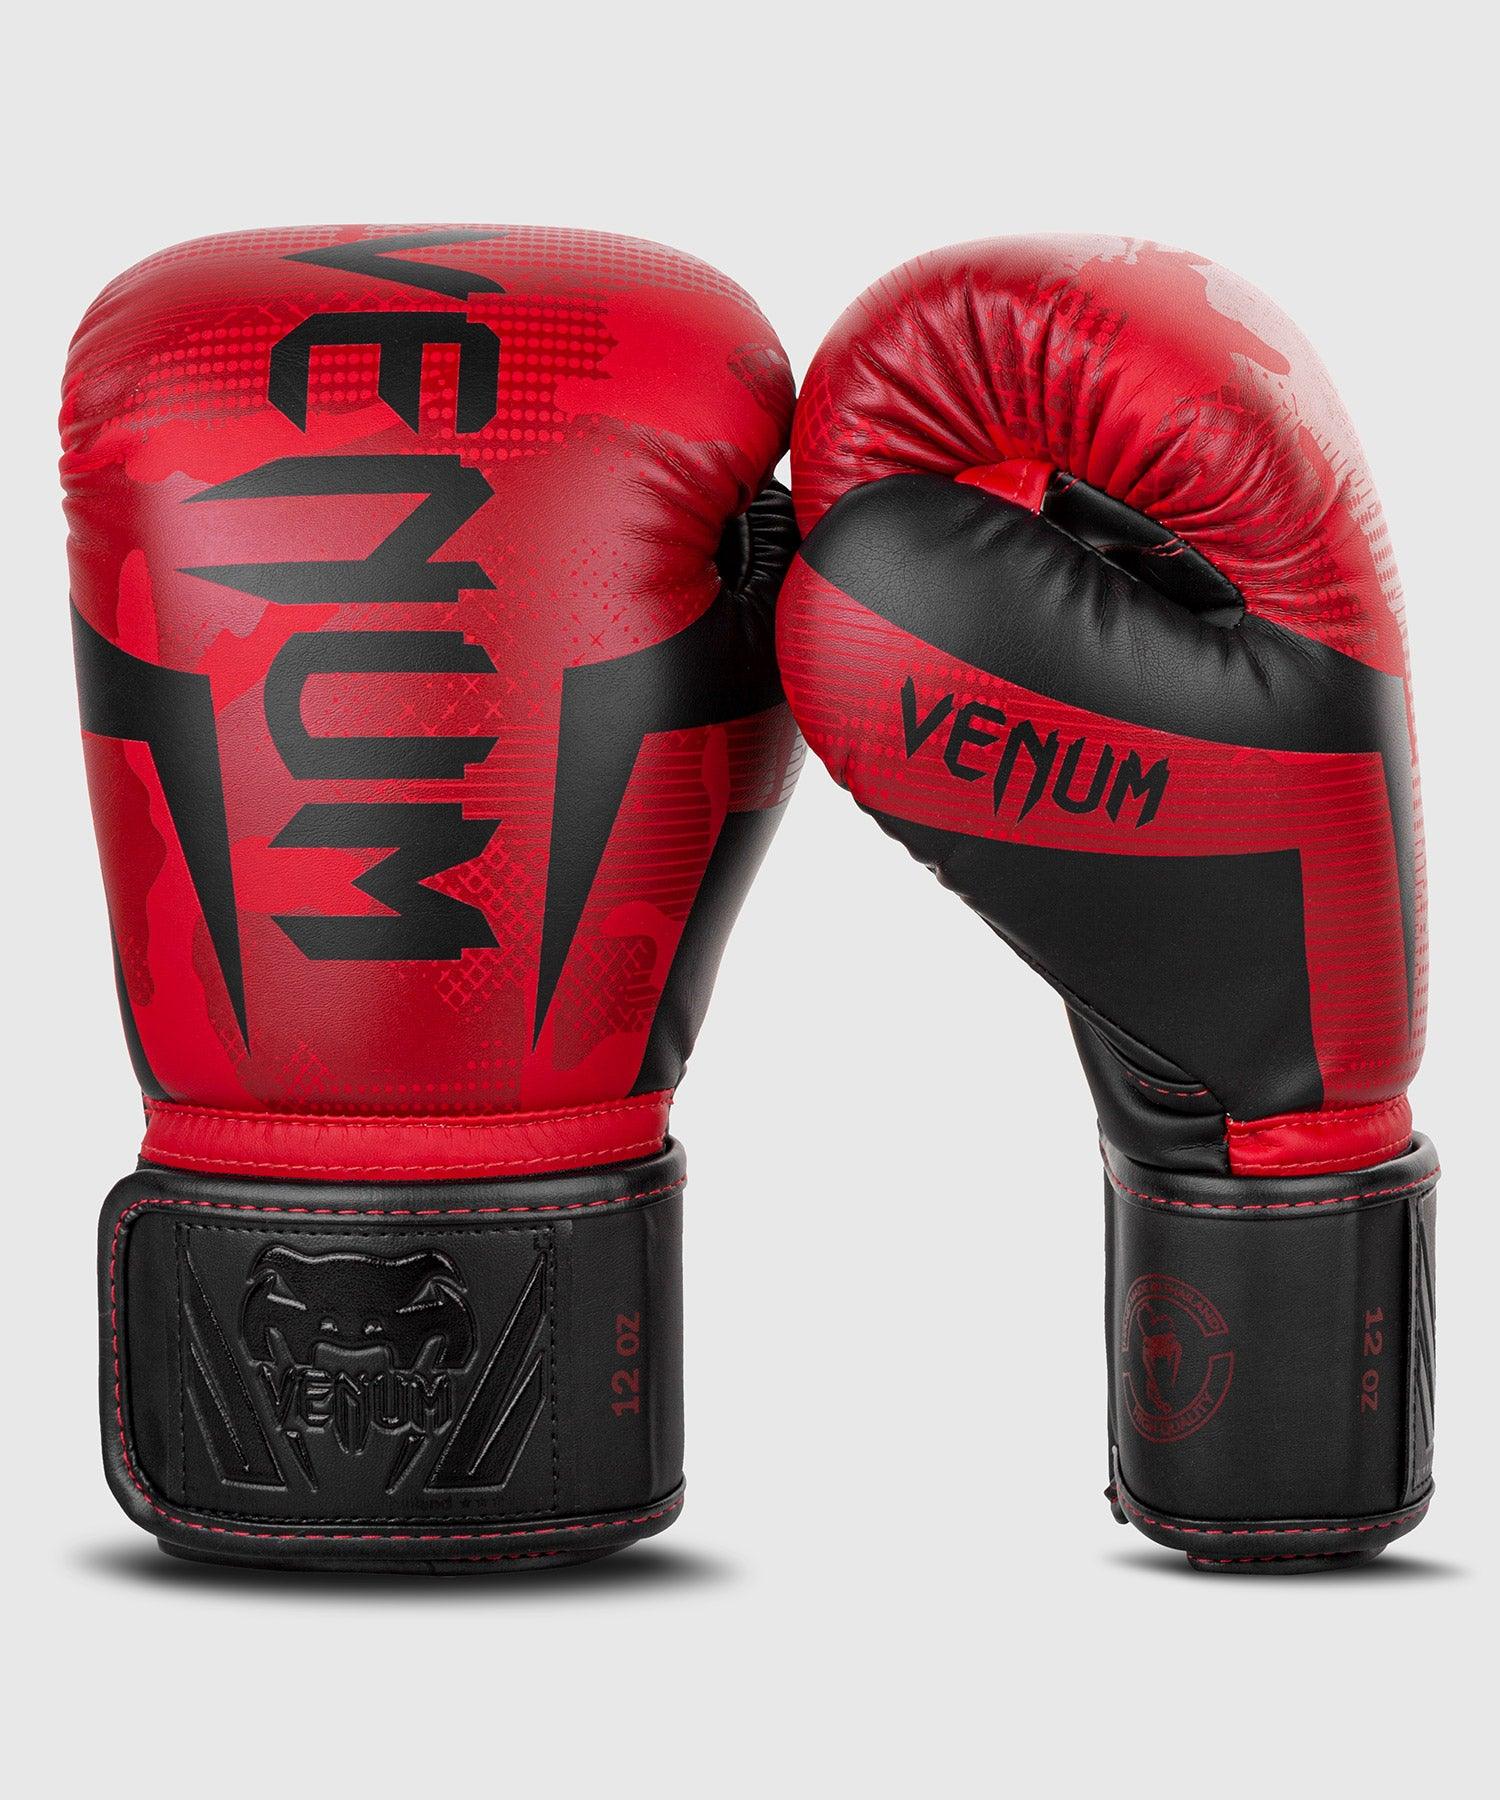 Venum Elite Boxing Gloves - Red Camo Picture 3